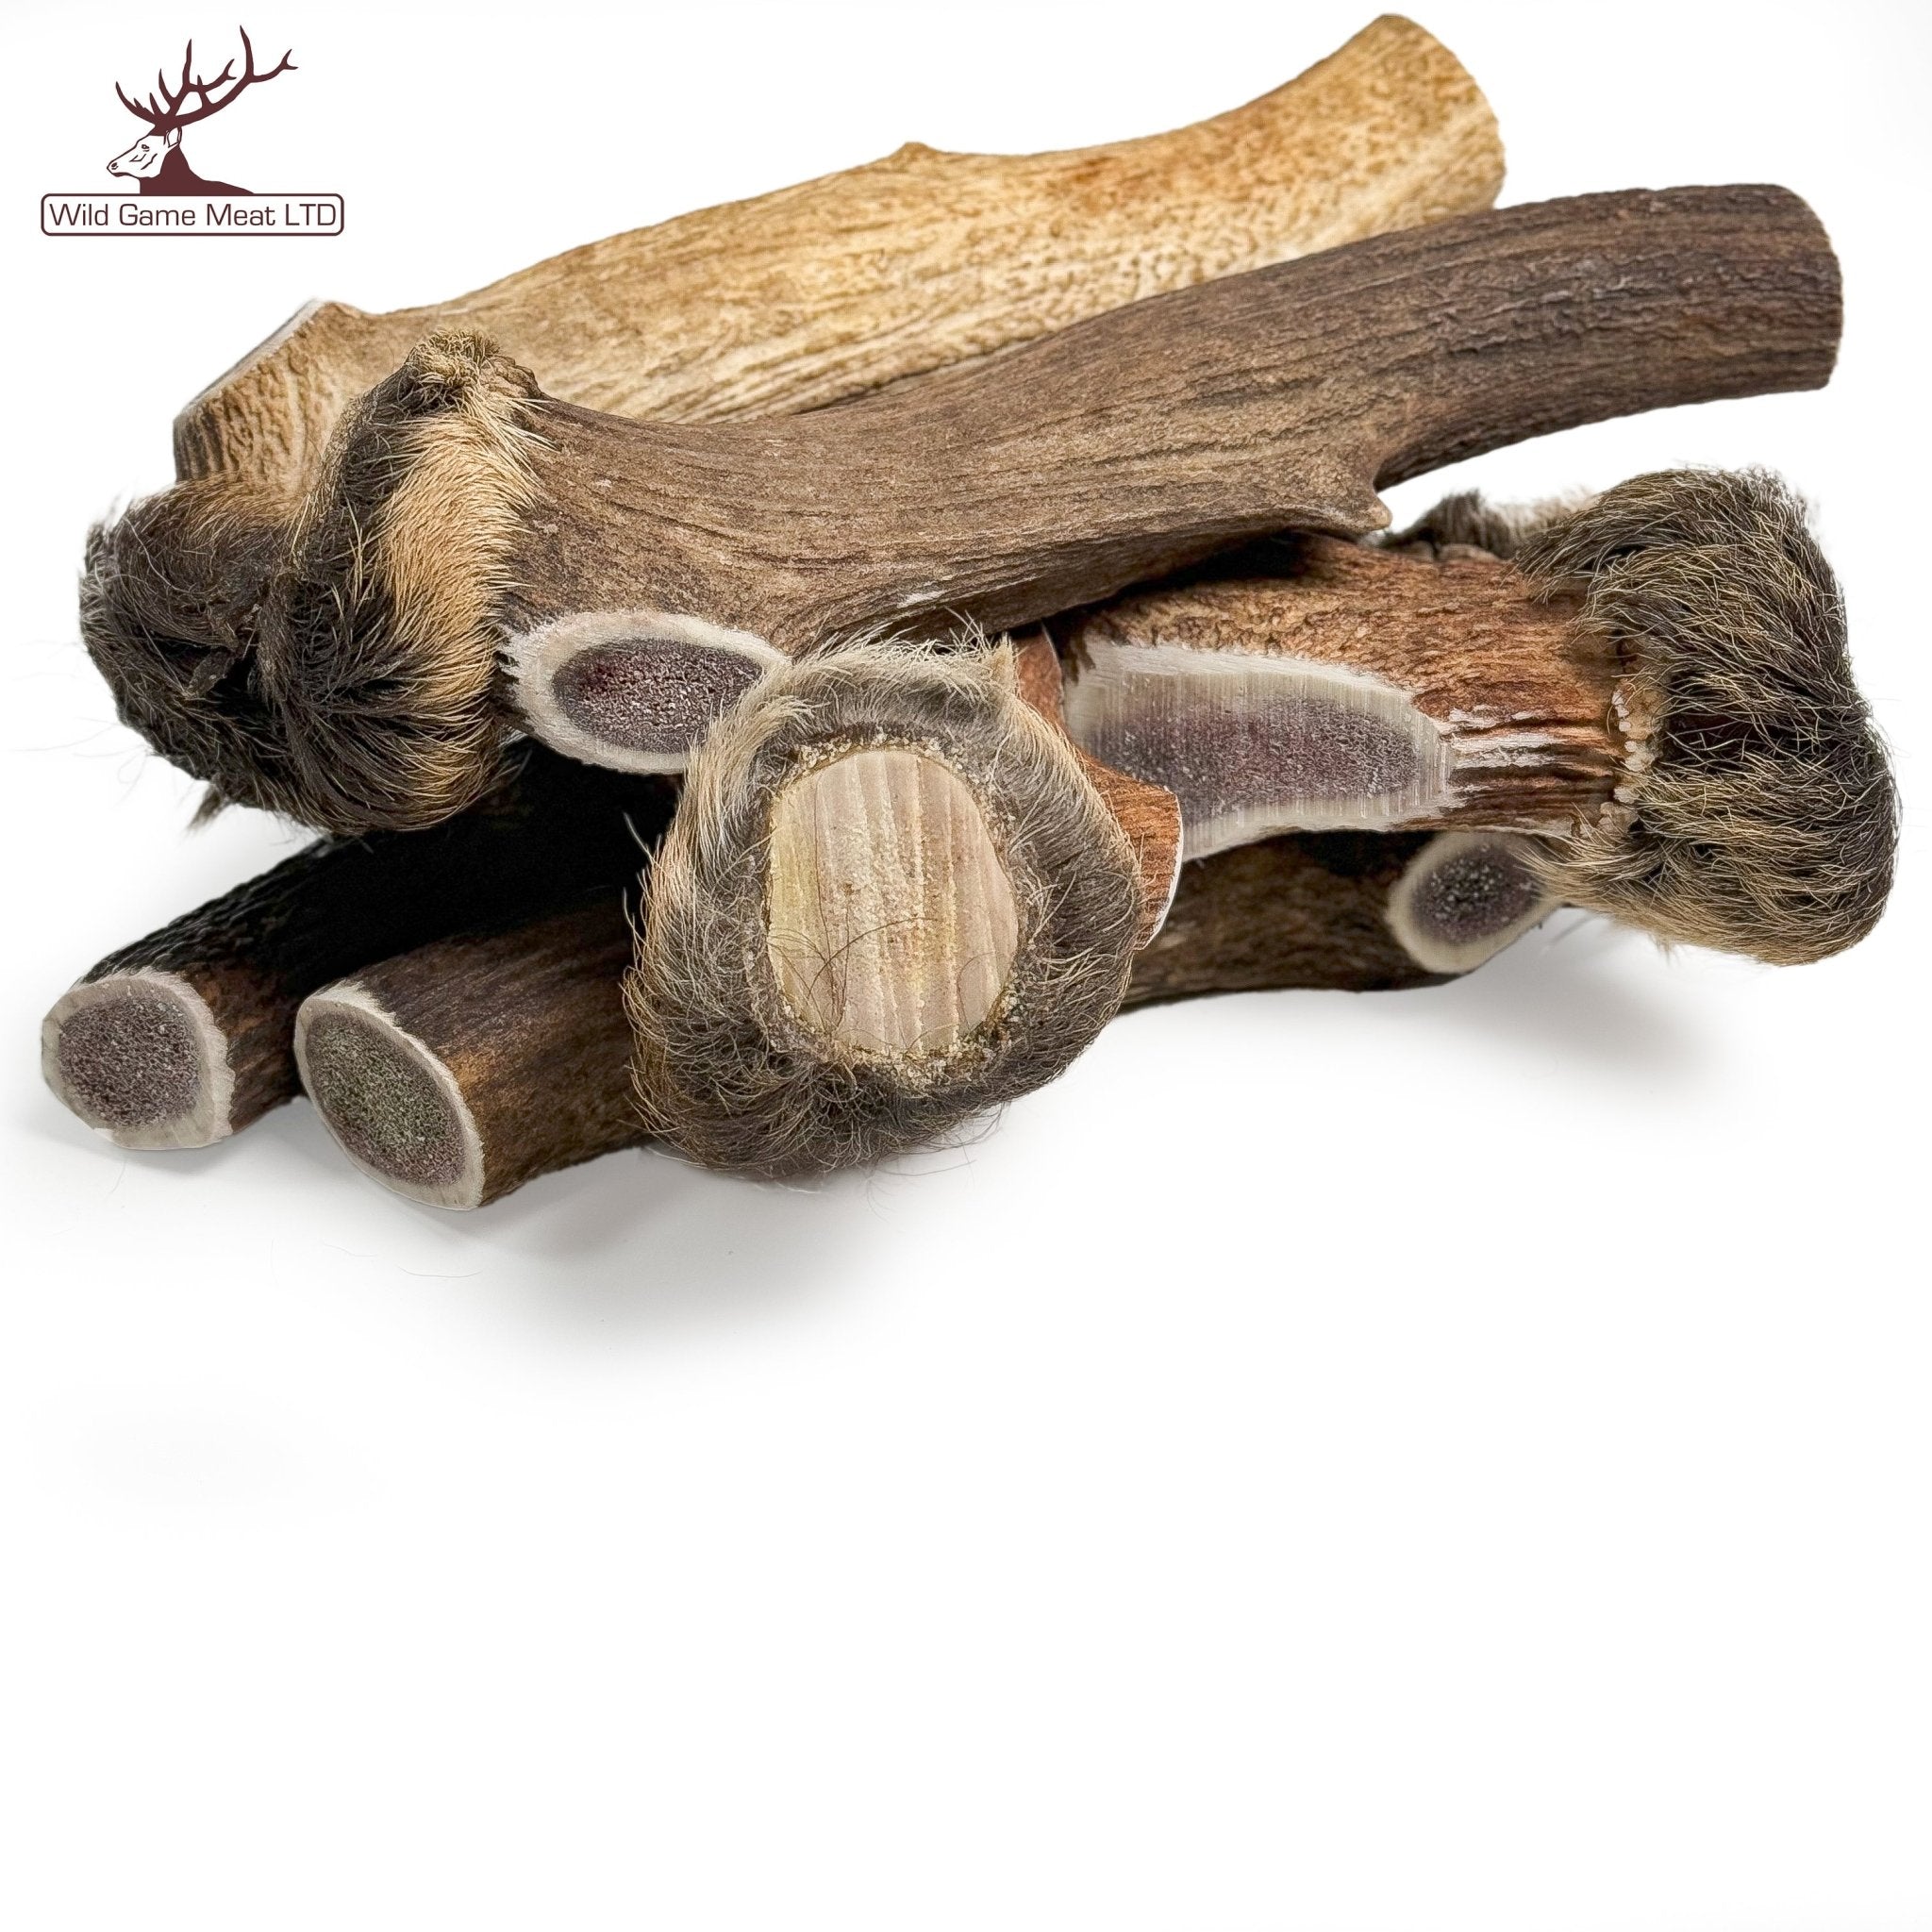 New ! XL Red Deer Antler with Natural Fur Trim & Crown - Wild Game Meat Ltd